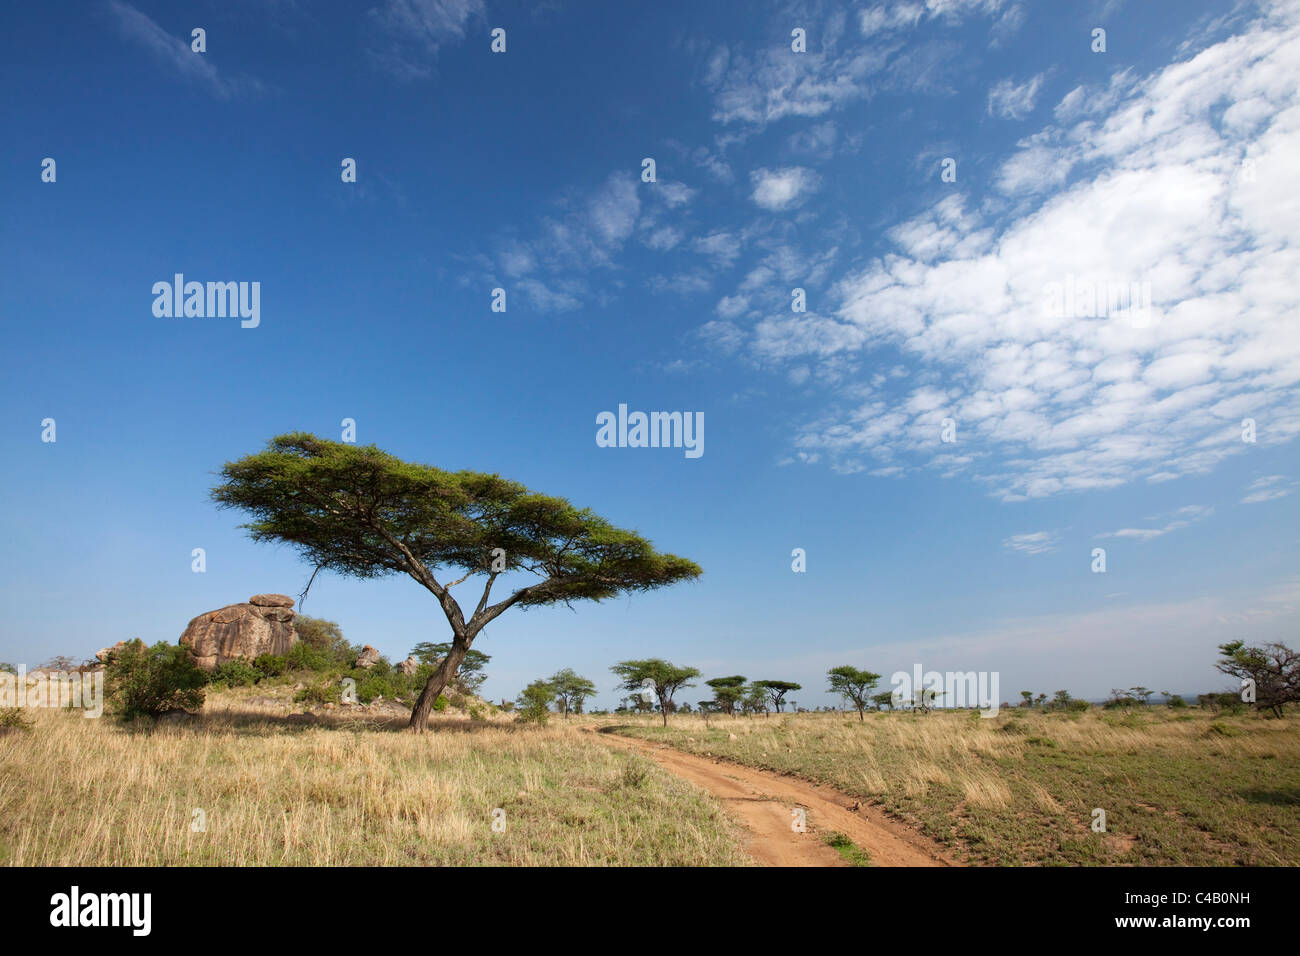 Tanzania, Serengeti. Typical Serengeti landscape near the Maasai Kopjes. Stock Photo